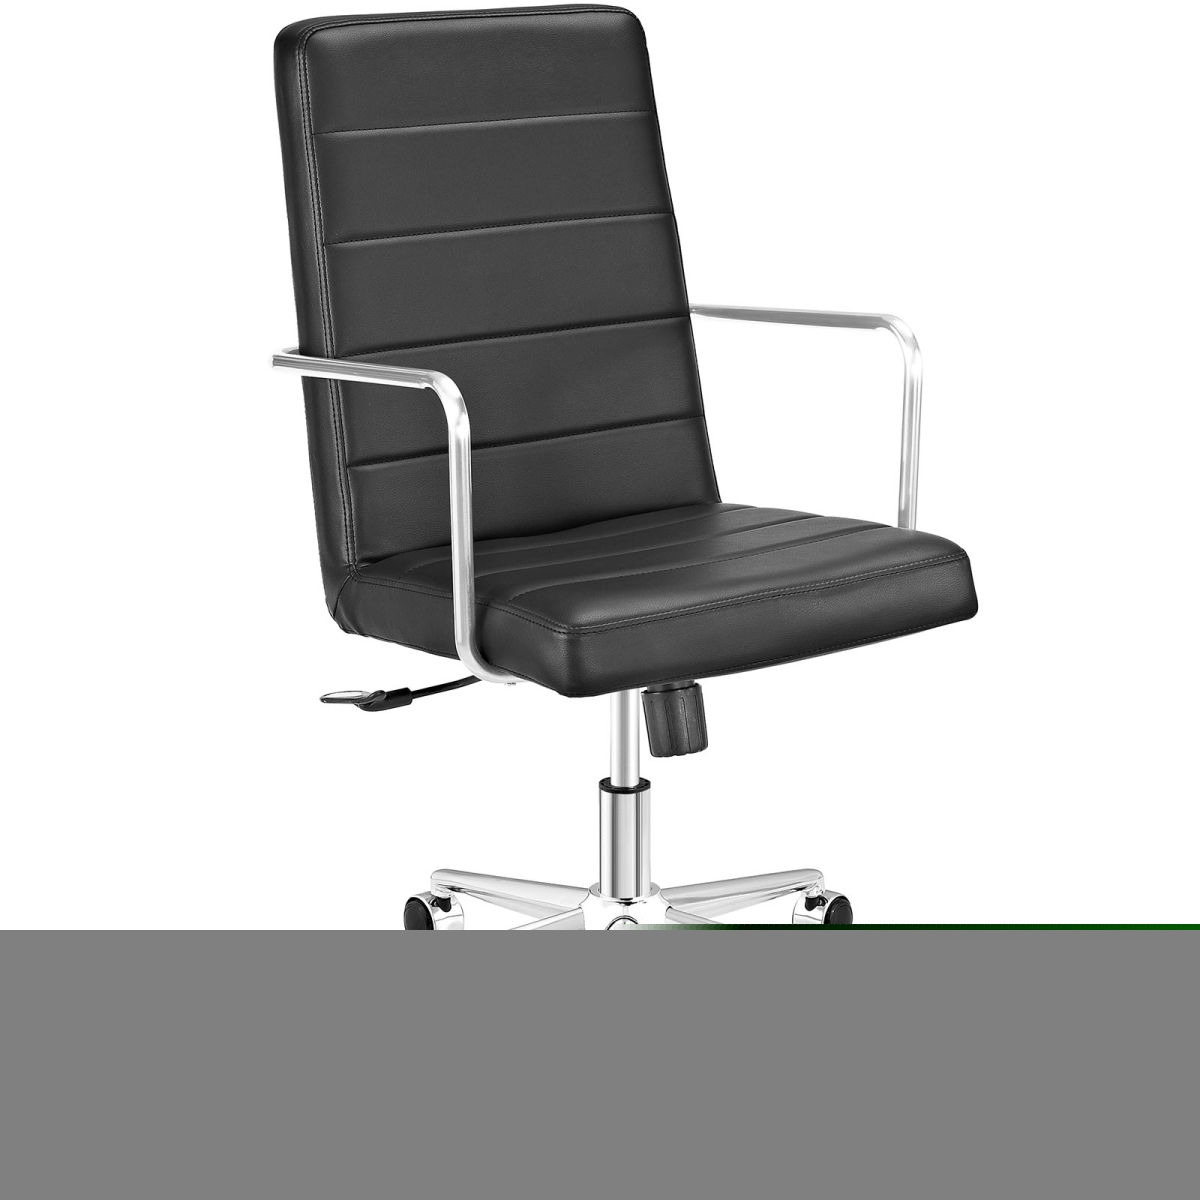 Modway Eei-2124-blk Cavalier Highback Office Chair, Black